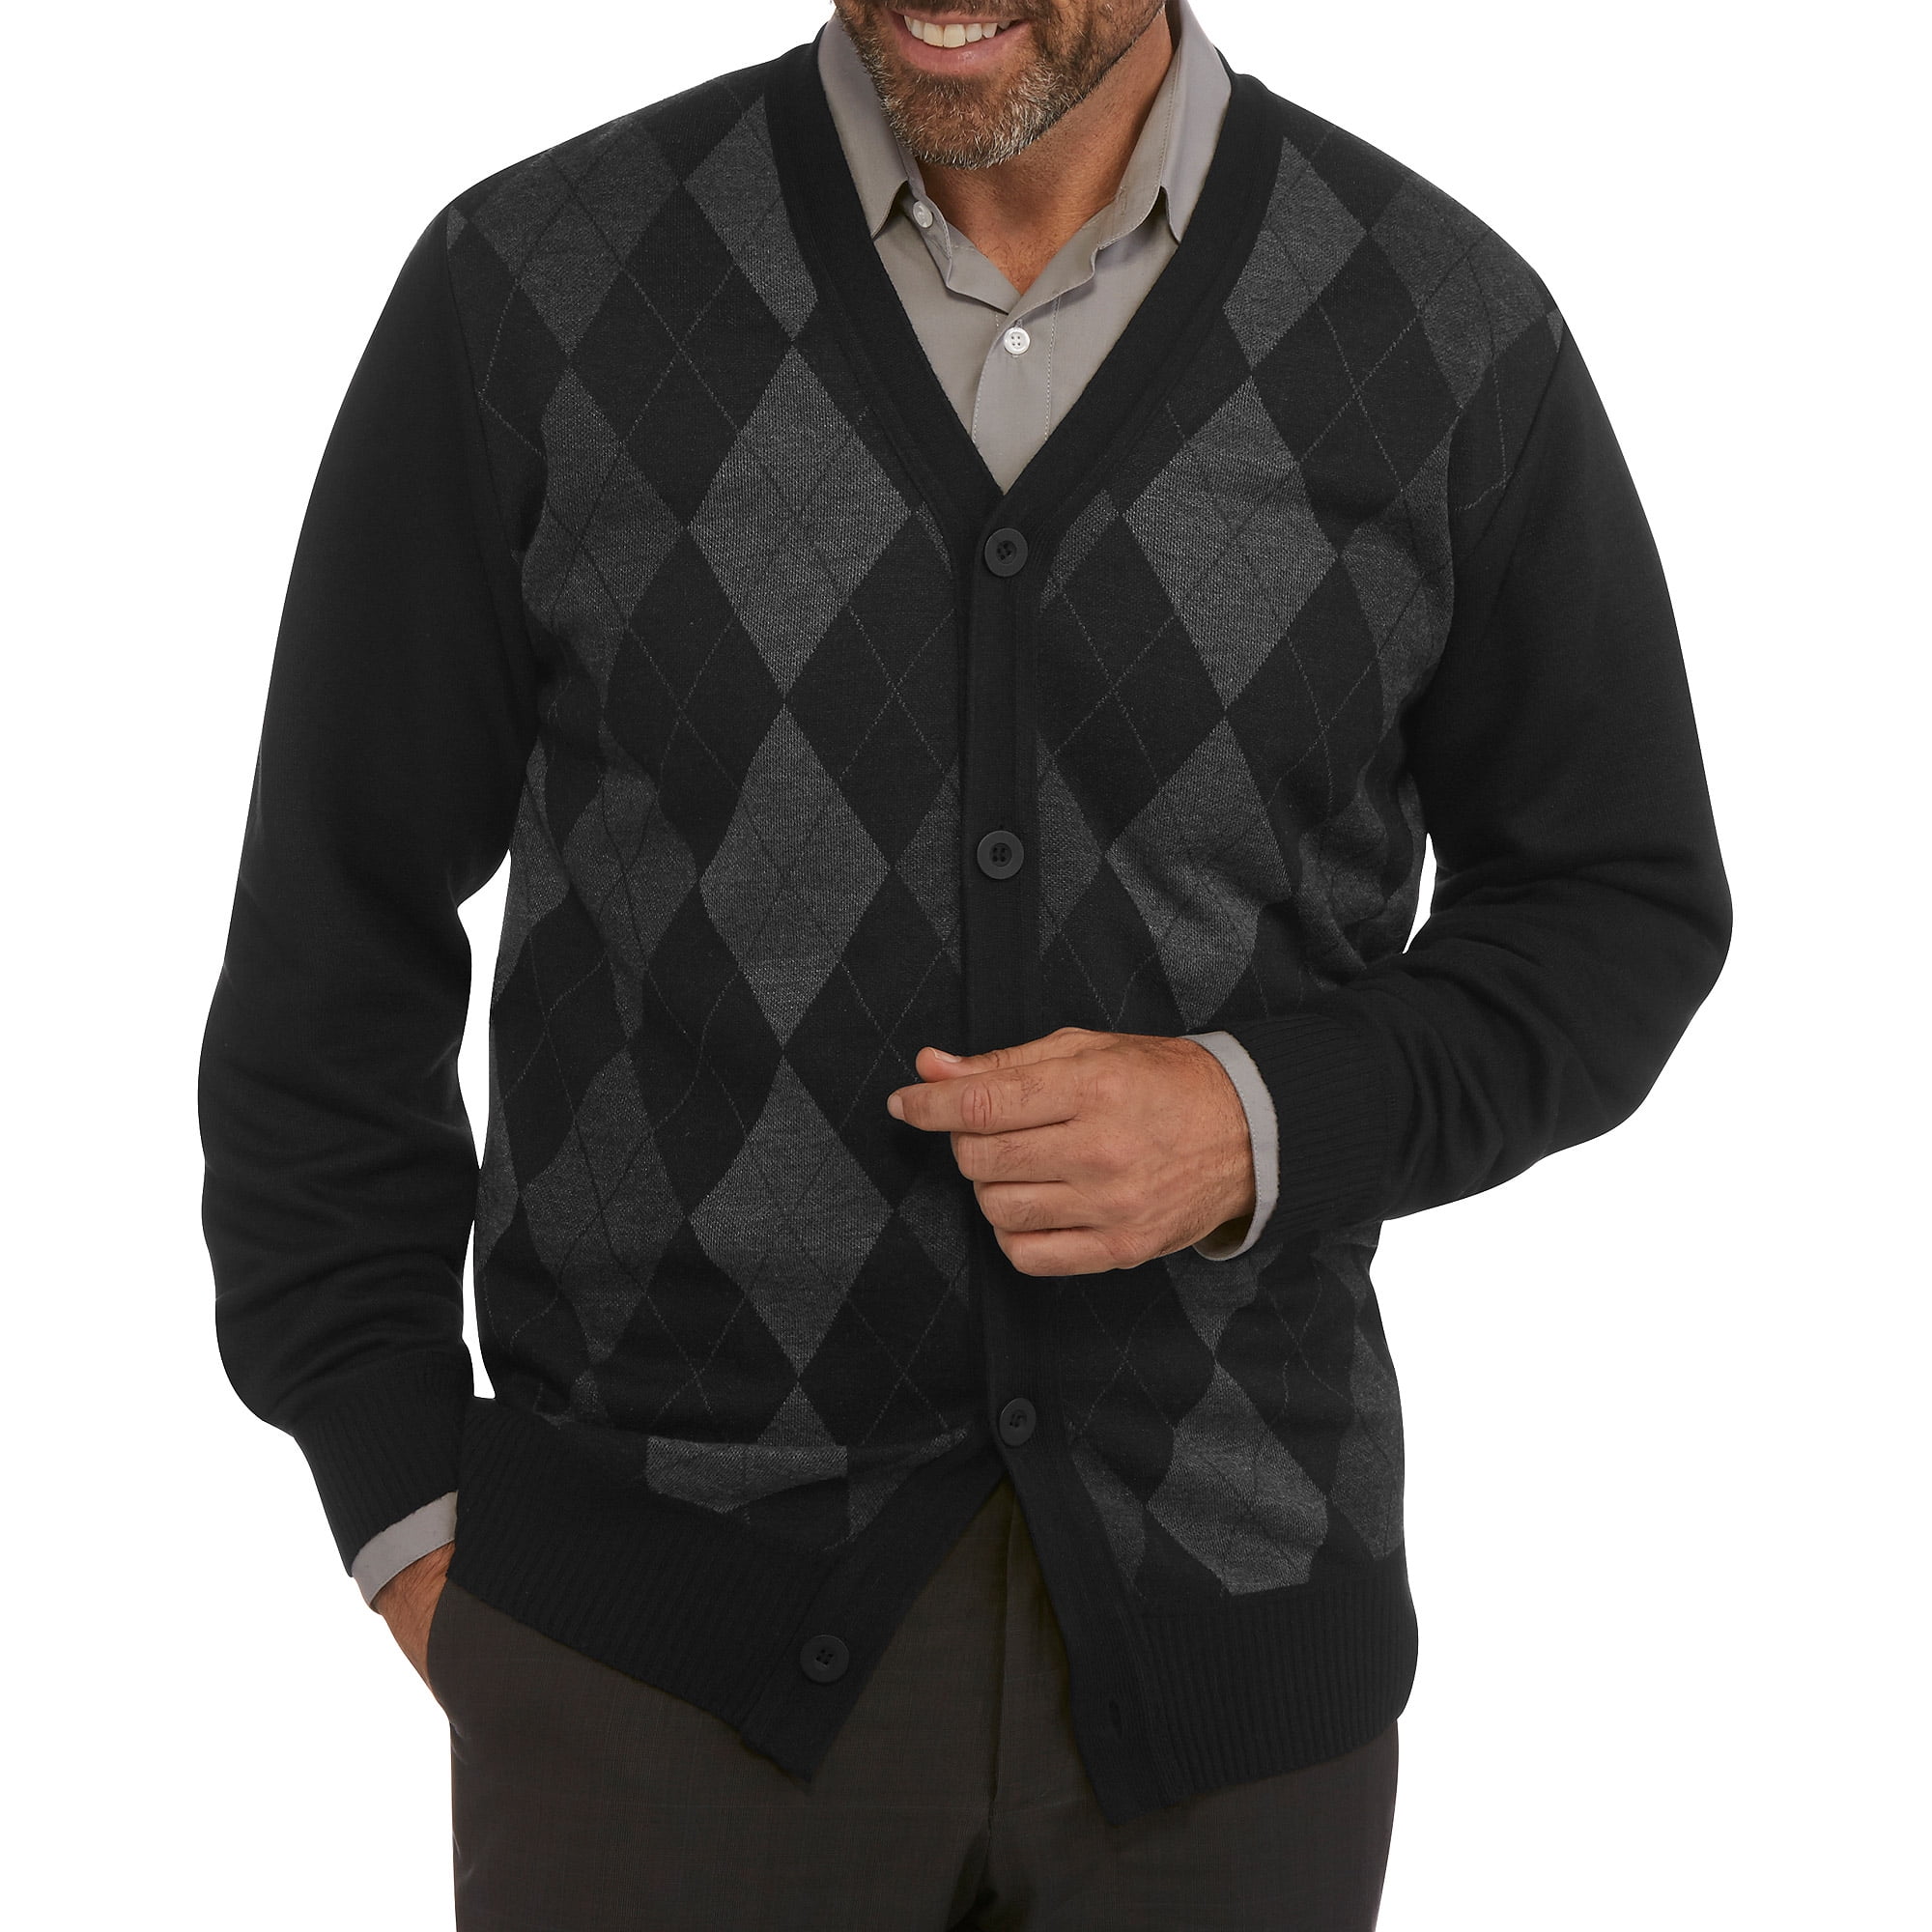 Big Men's Jacquard Crew Sweater - Walmart.com